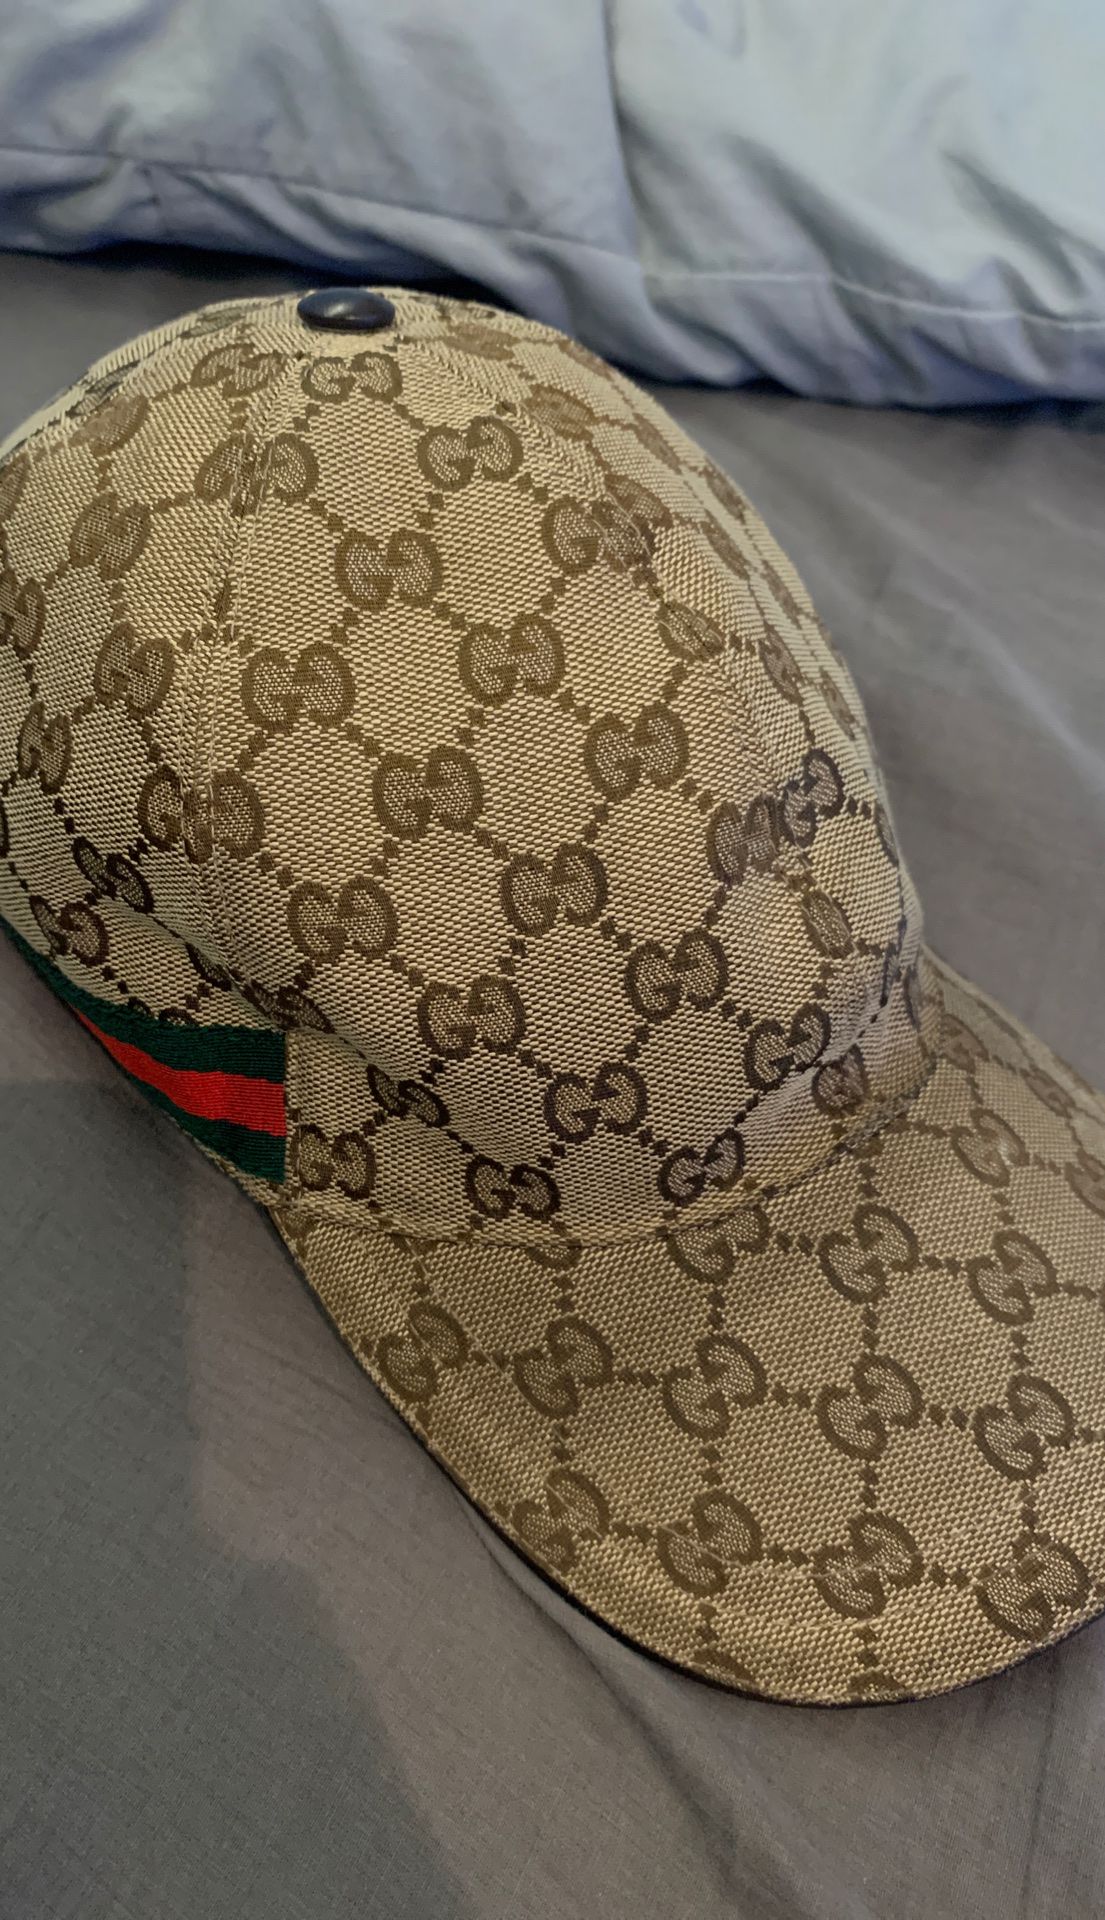 Authentic Gucci hat